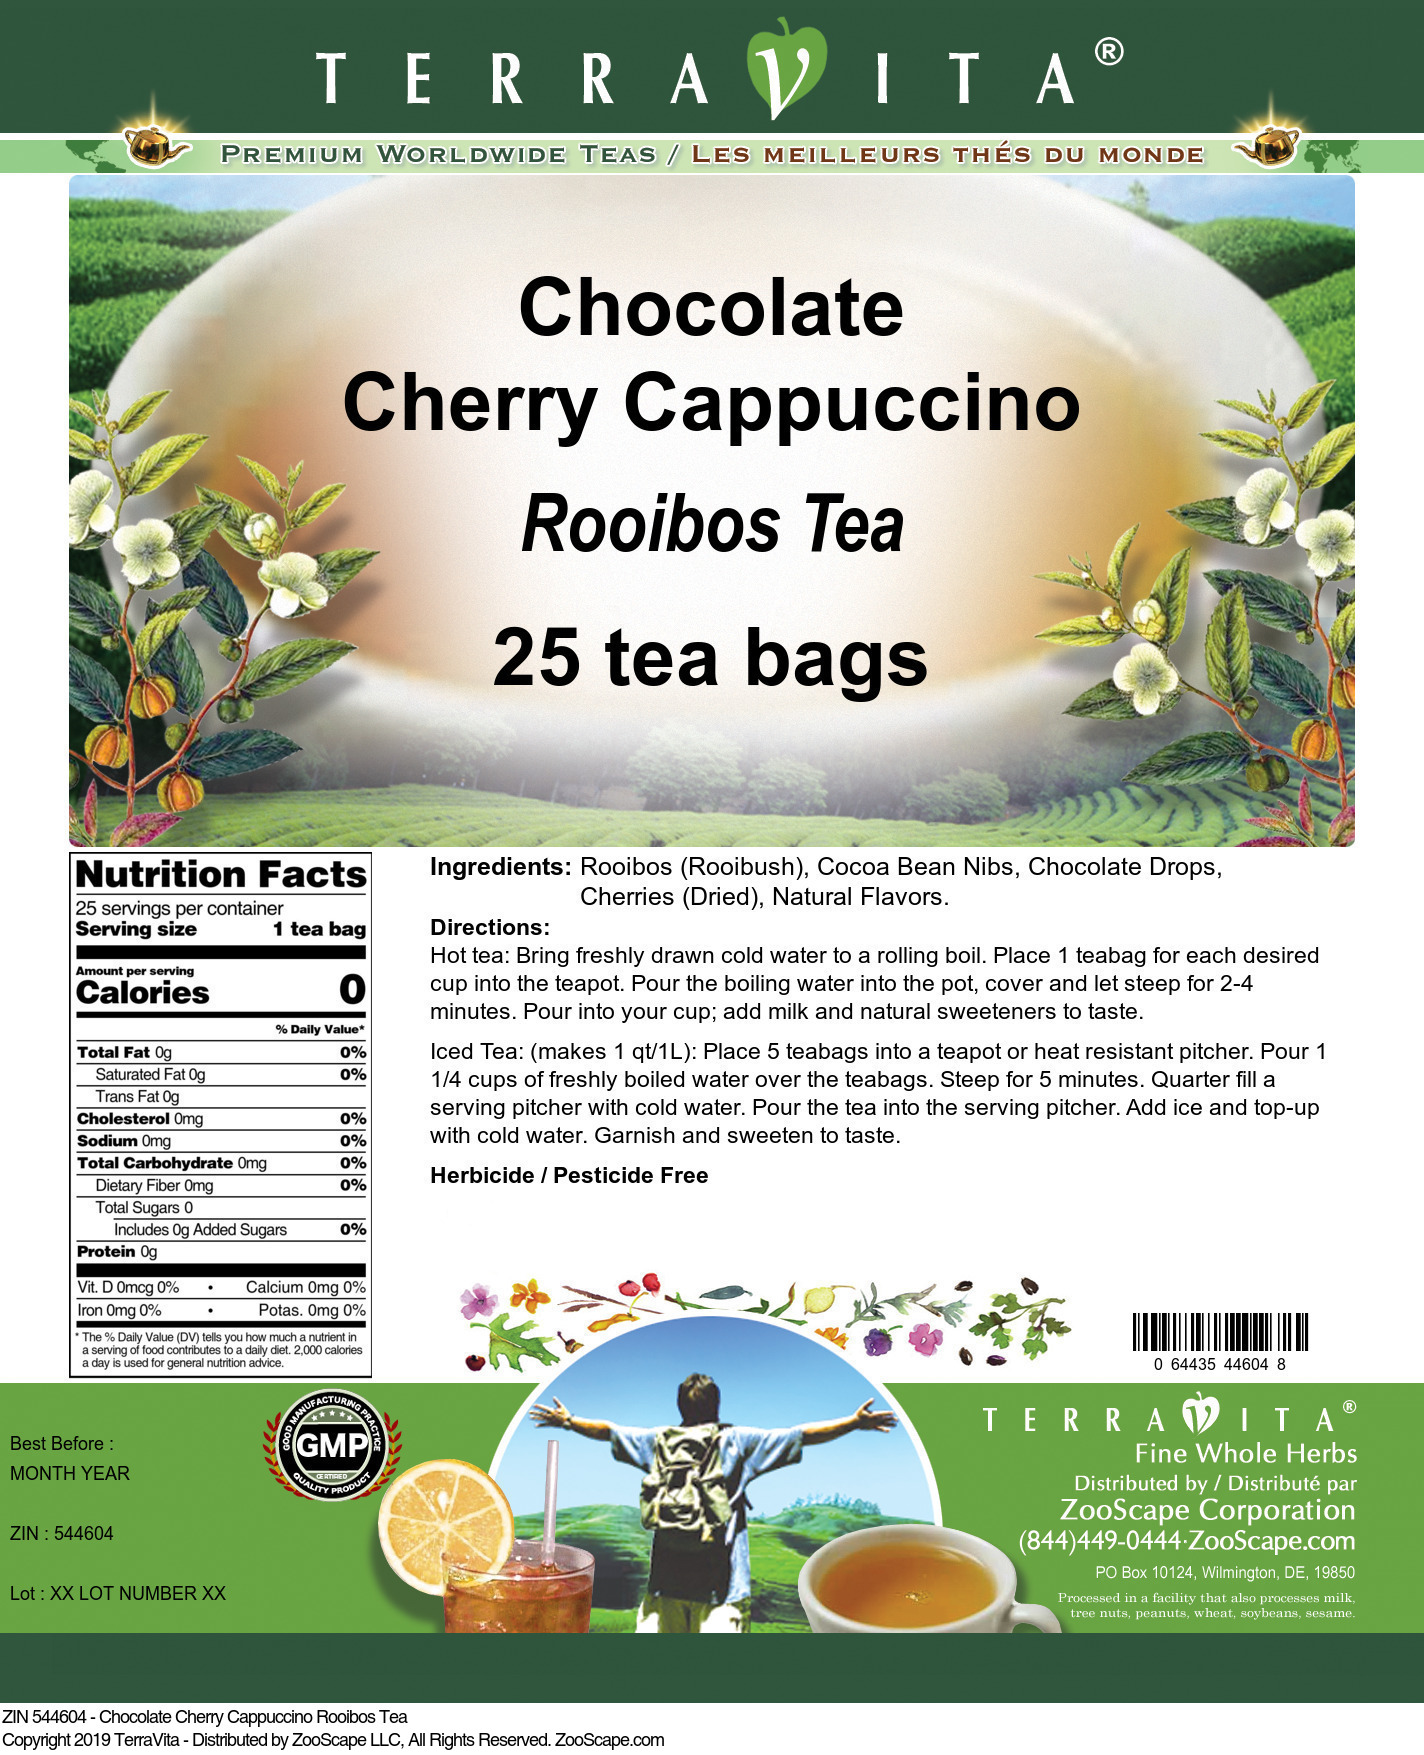 Chocolate Cherry Cappuccino Rooibos Tea - Label